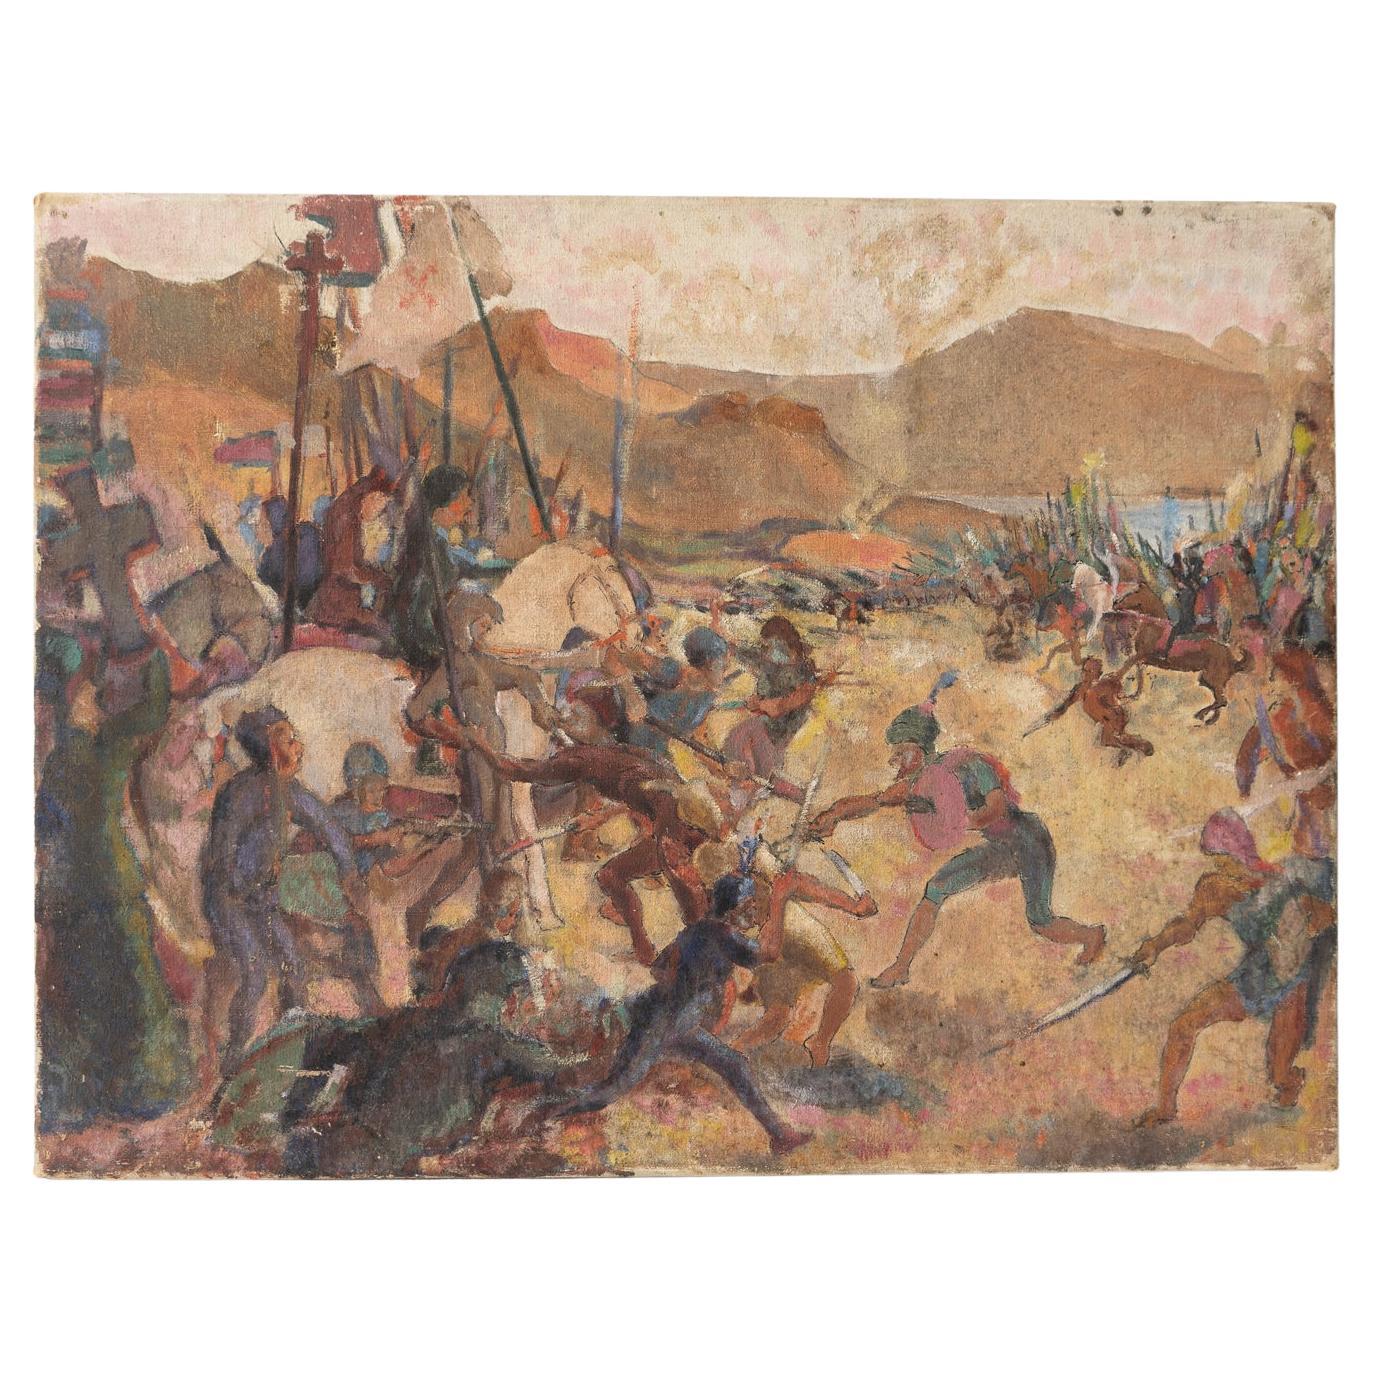 Depiction of a Medieval Battle Scene, Antique Original Oil Painting